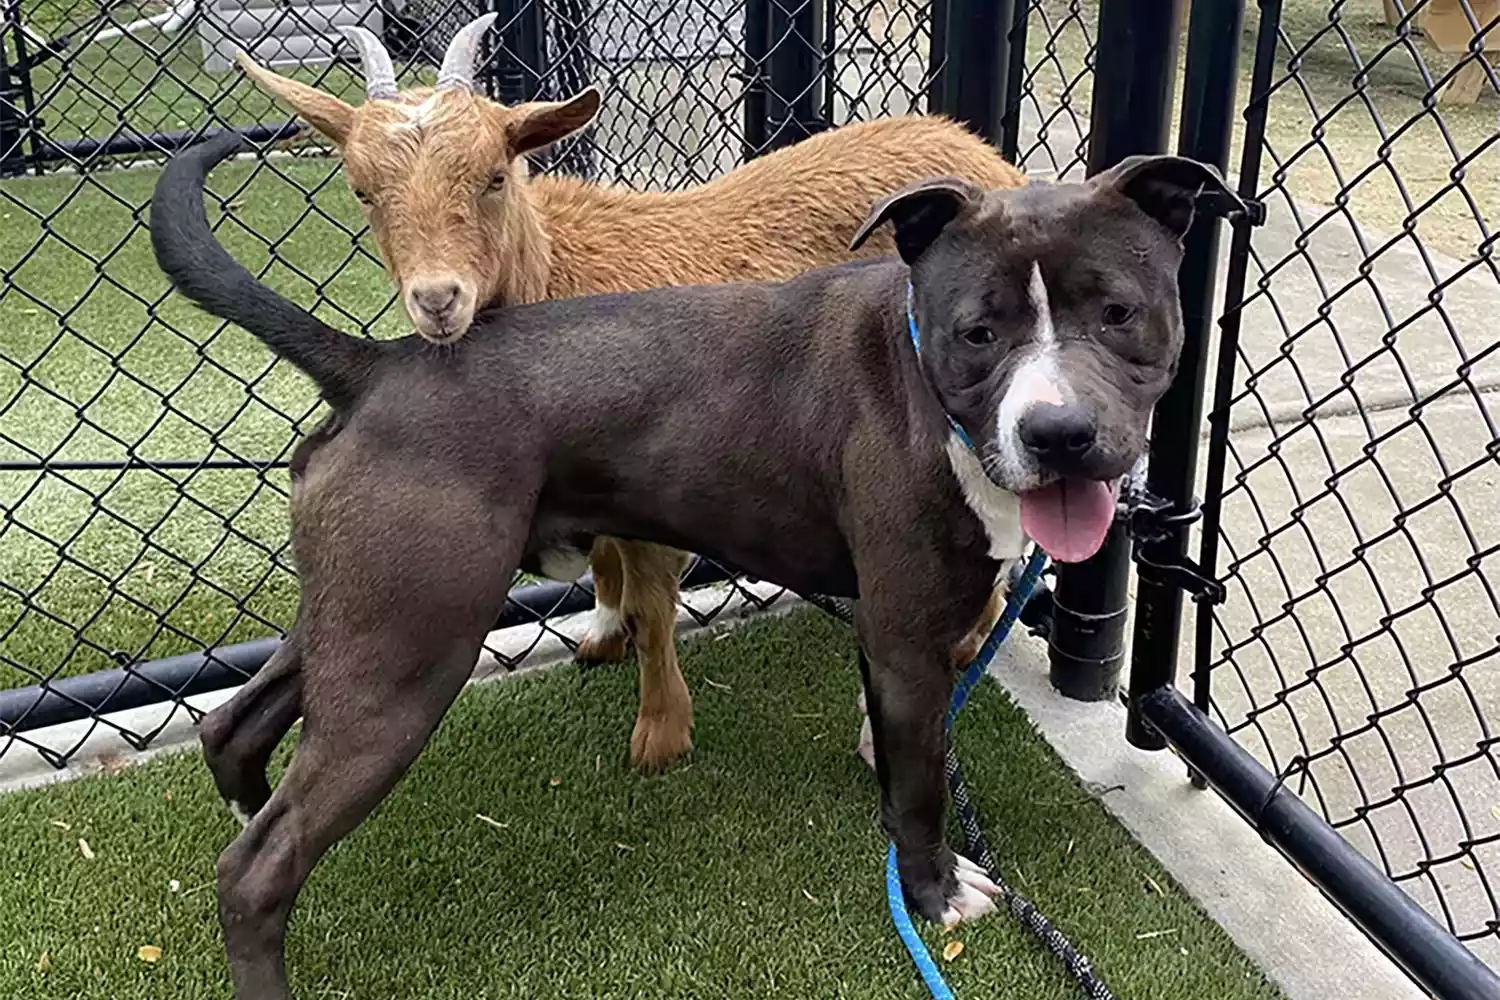 dog and goat best friends at shelter. https://www.facebook.com/wakegov/posts/pfbid0mhfS8r2aFWHBXcMyUzUPmmLbcEUAshJKPqHDgocJyB783dmF6yJQbR6yAbNbgv8Ll. https://www.wake.gov/news/wake-county-animal-center-help-goat-and-dog-duo-find-forever-home?fbclid=IwAR2-wECwO0eEpL0h6Rwb-2JUqohD_vlgAyAJiJZl0qXEqOKsFwkzoiZ97d8. Wake County Government